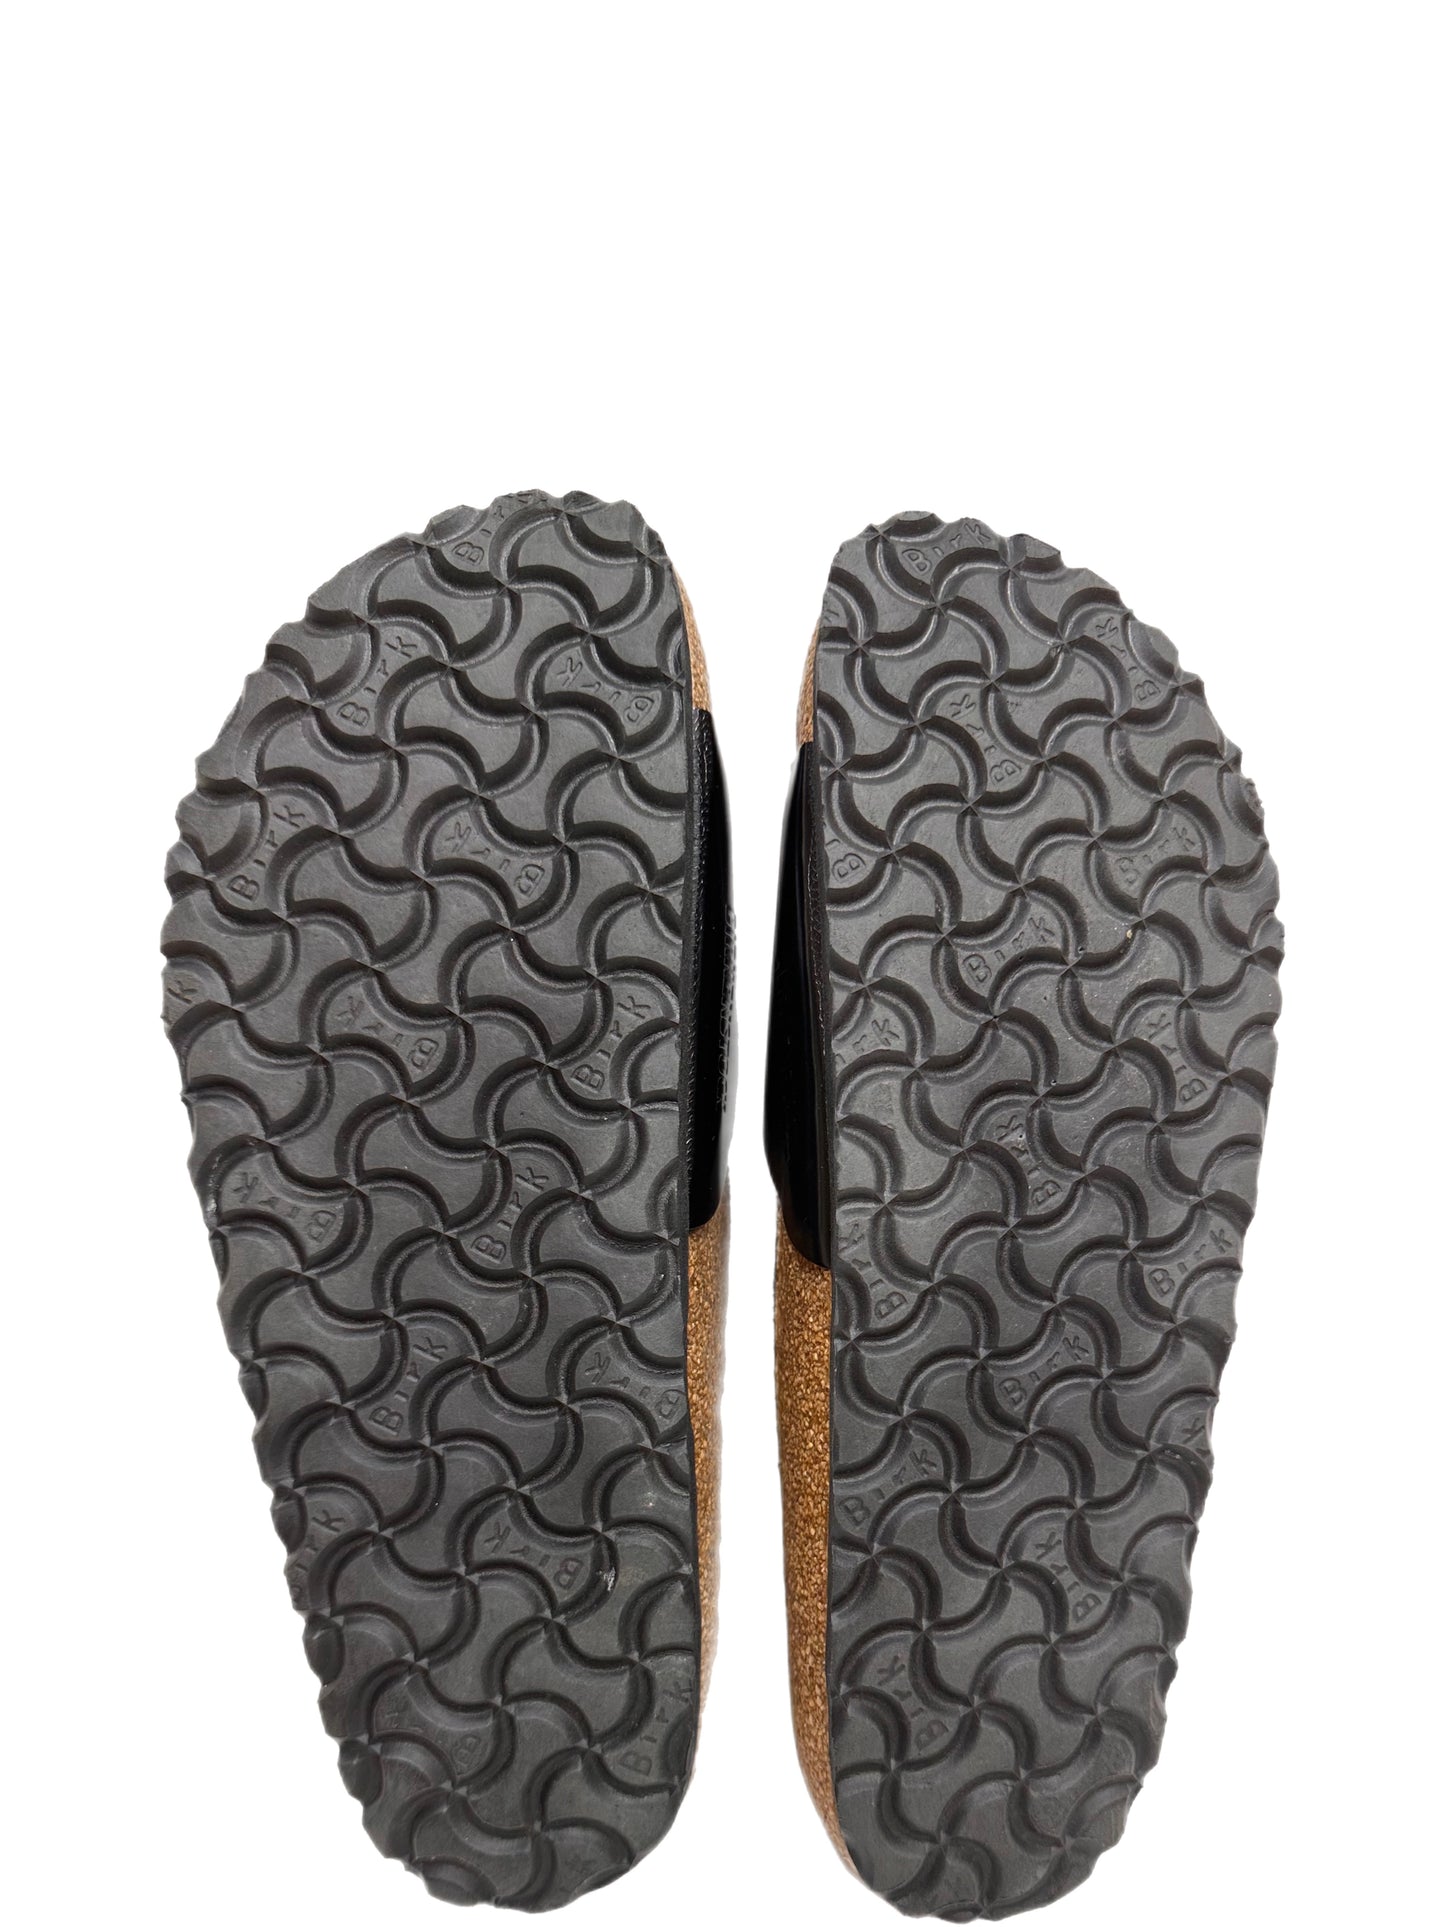 BIRKENSTOCK Patent Leather Madrid Sandals Black Size 40